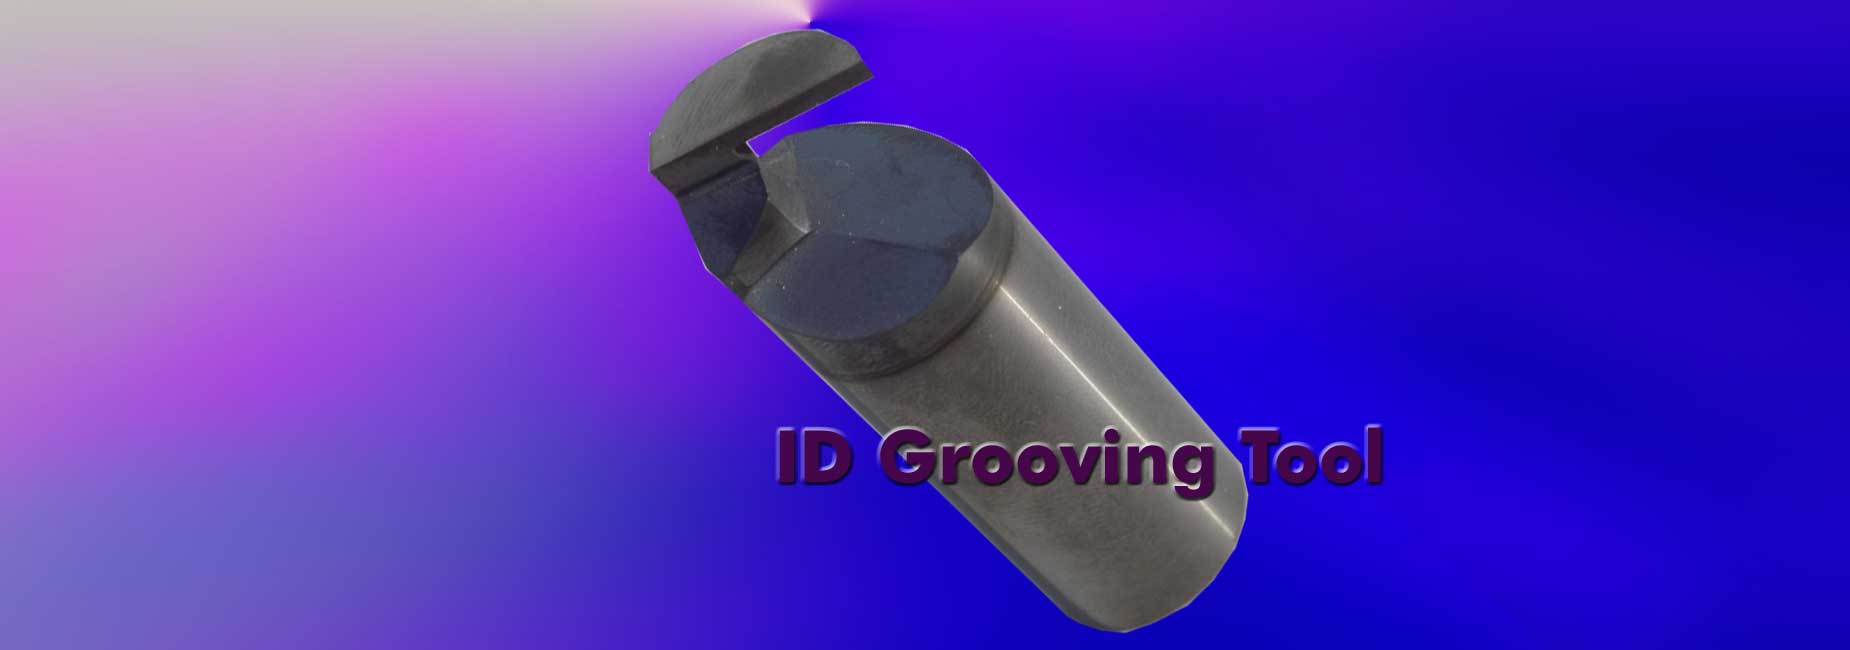 ID Grooving Tool 1850x650px